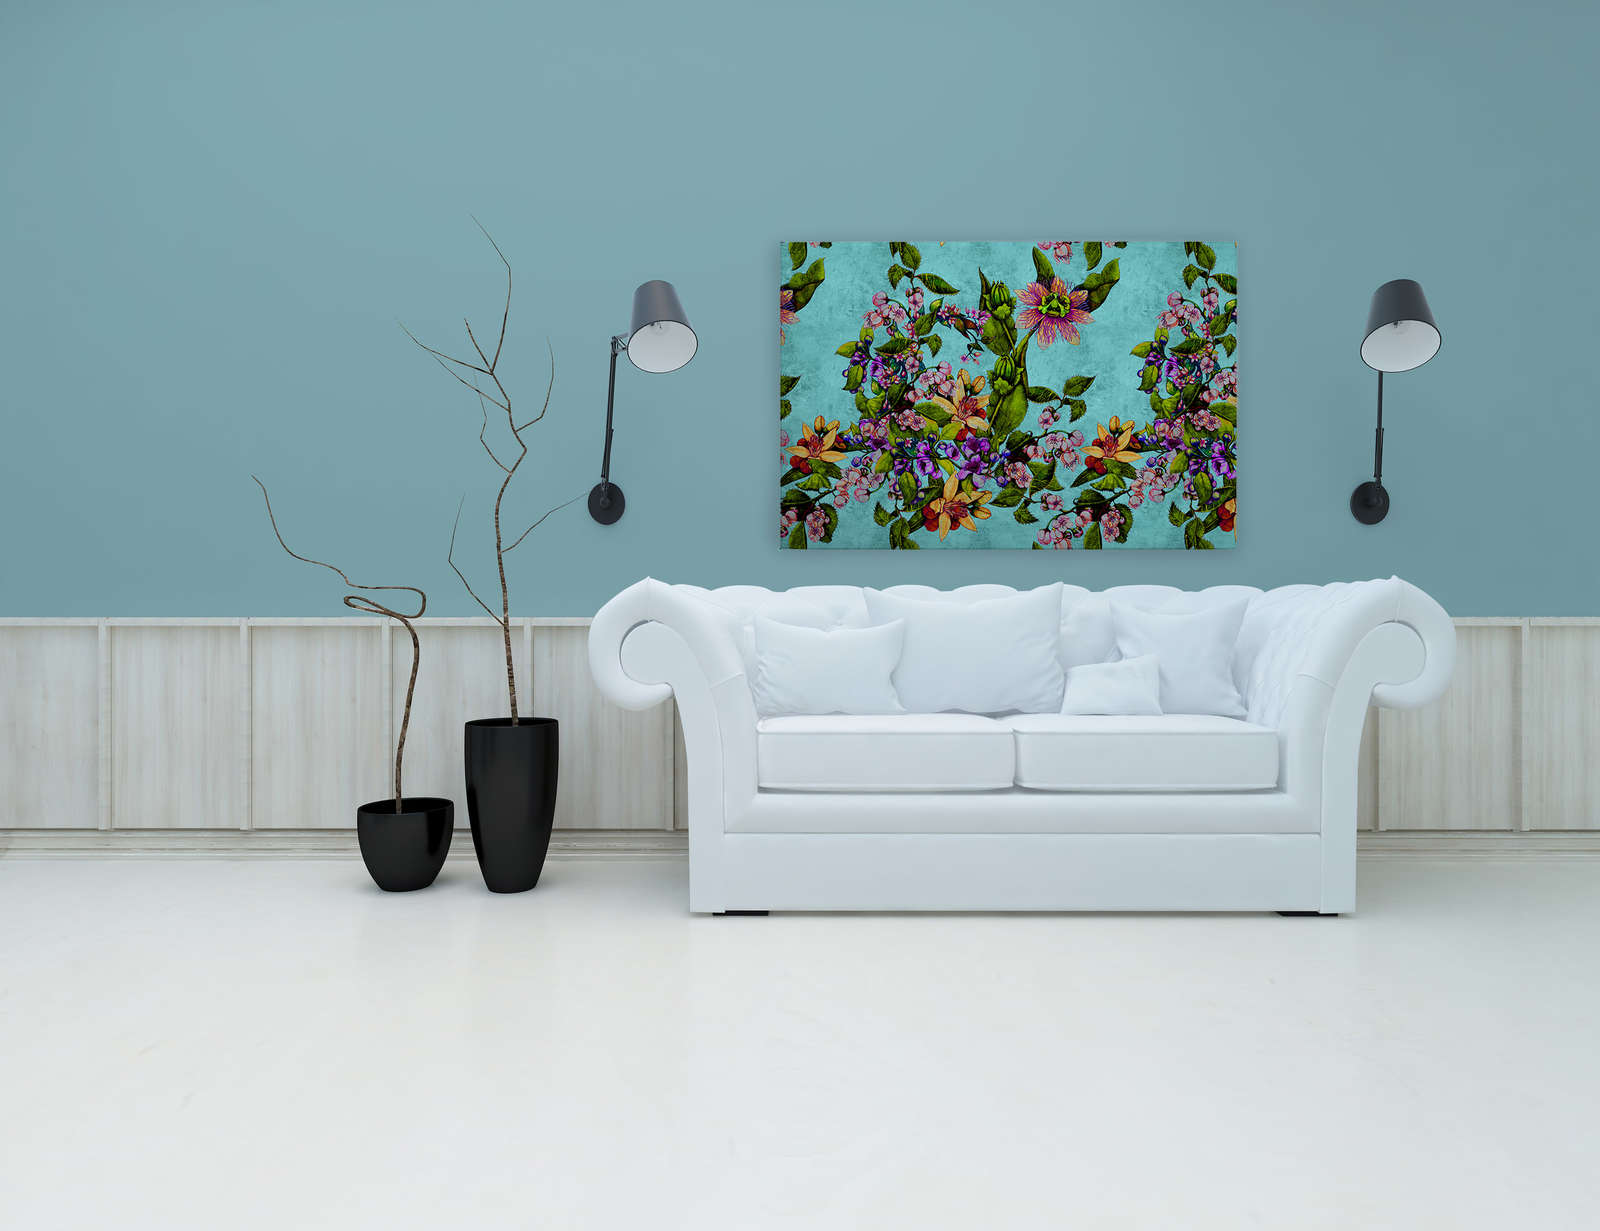             Tropical Passion 1 - Quadro su tela con motivi floreali - 1,20 m x 0,80 m
        